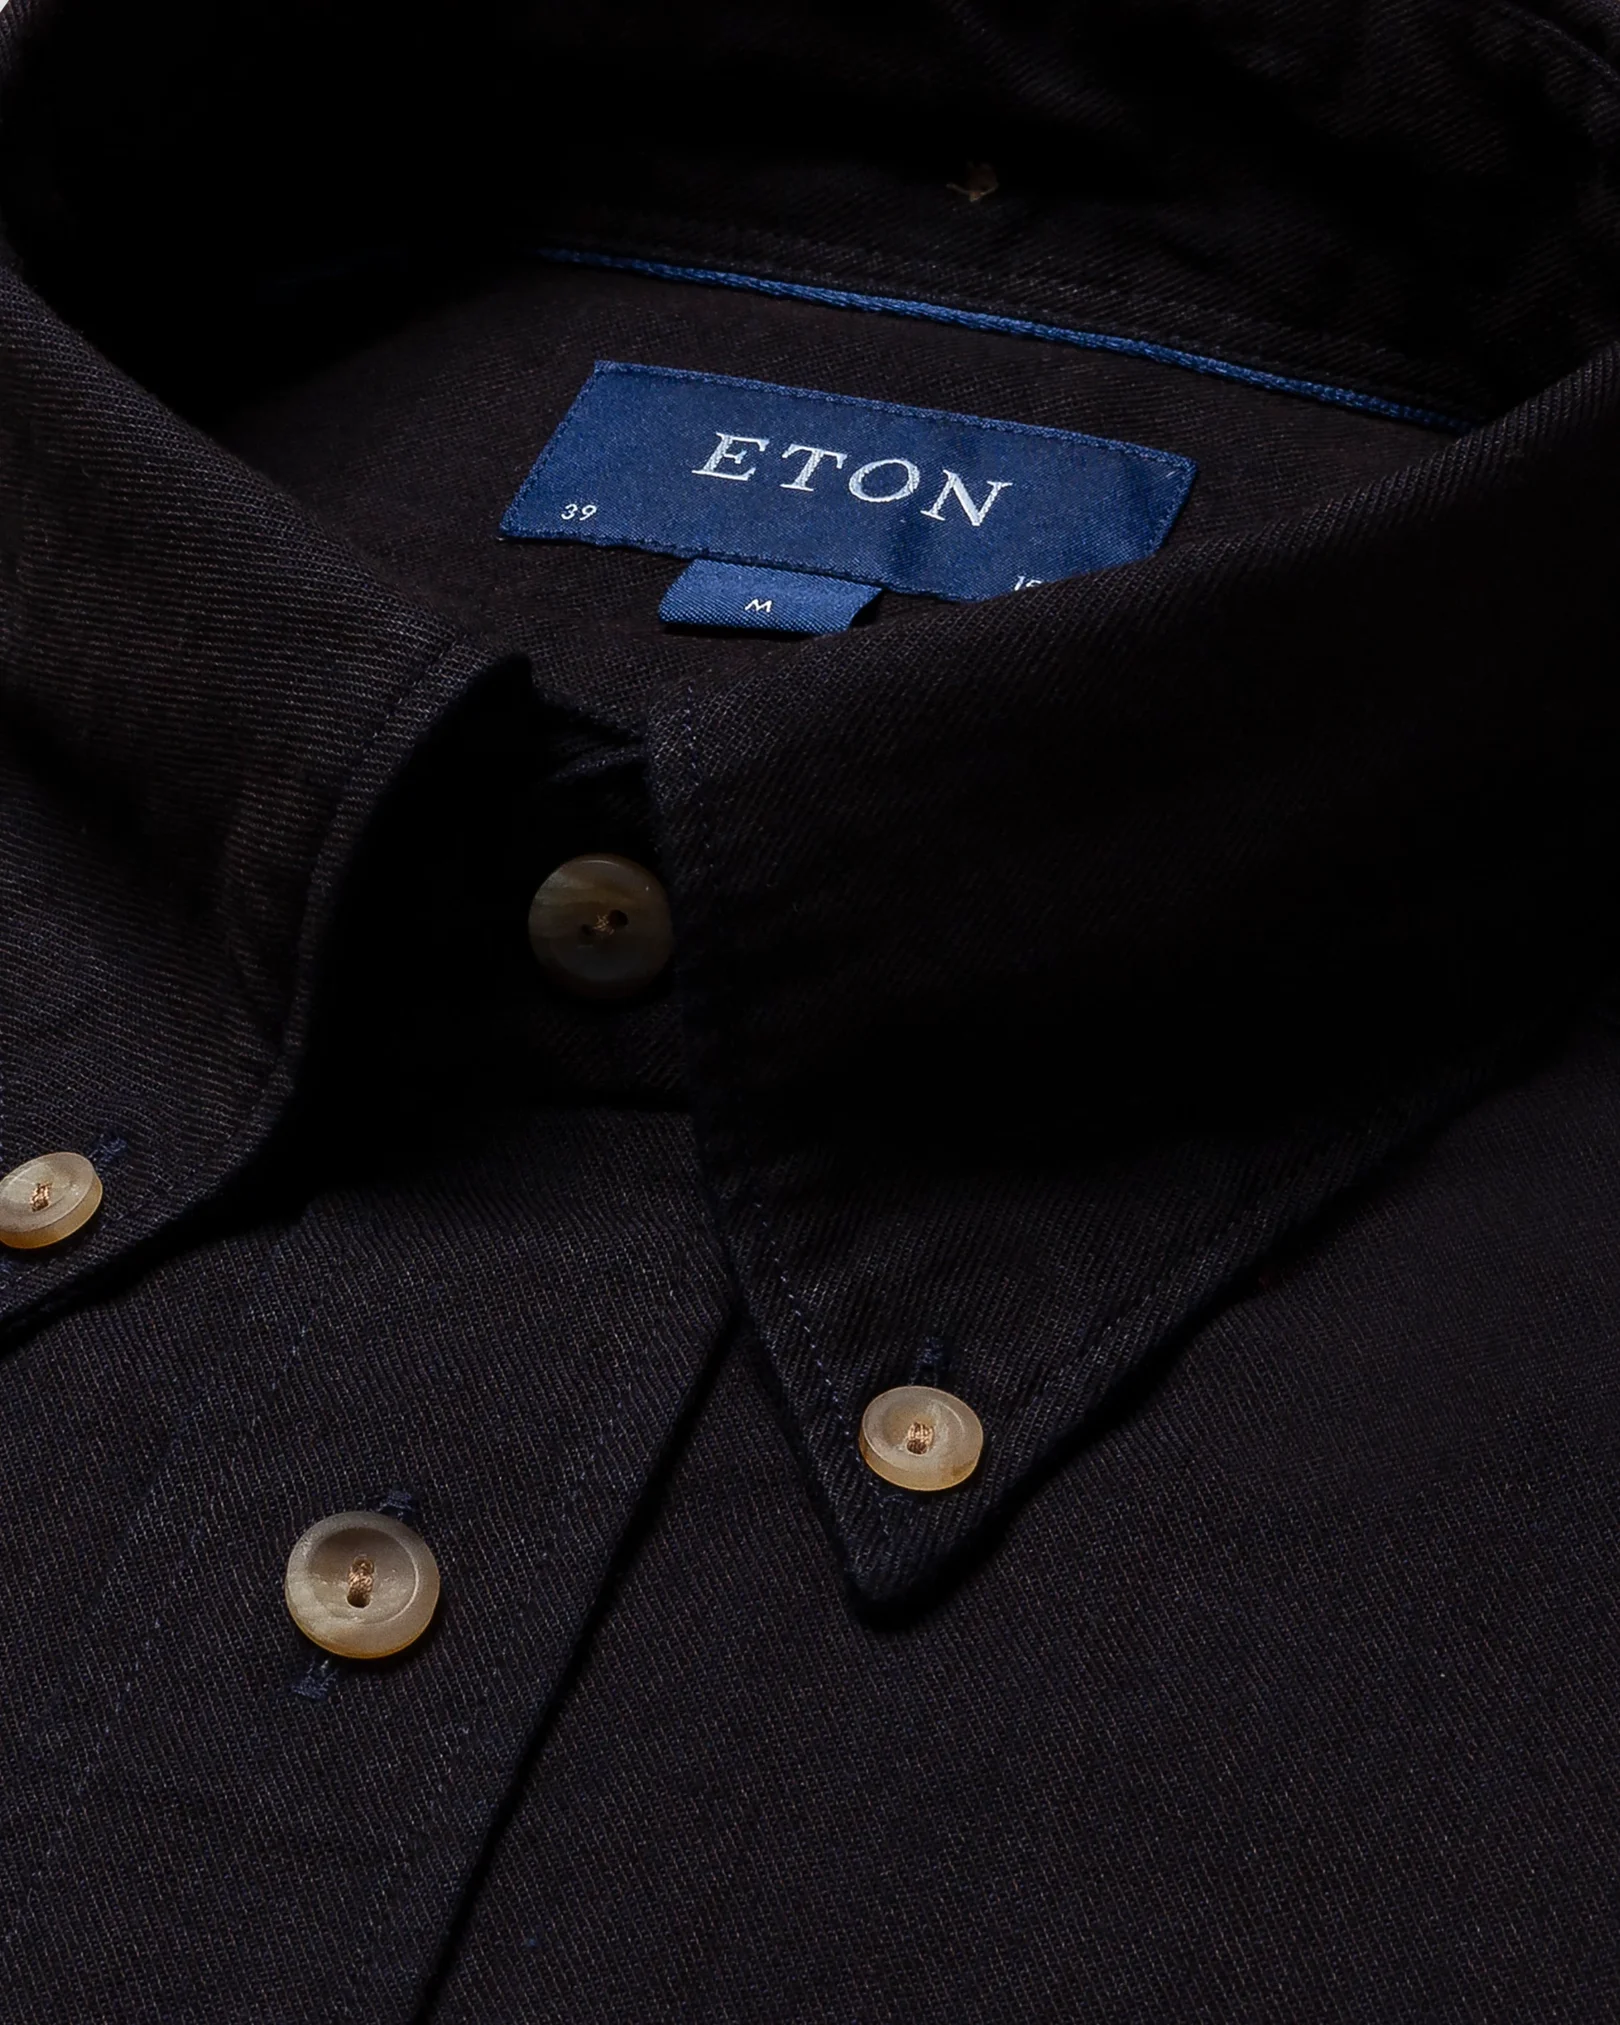 Eton - dark blue denim shirt with horn buttons button down